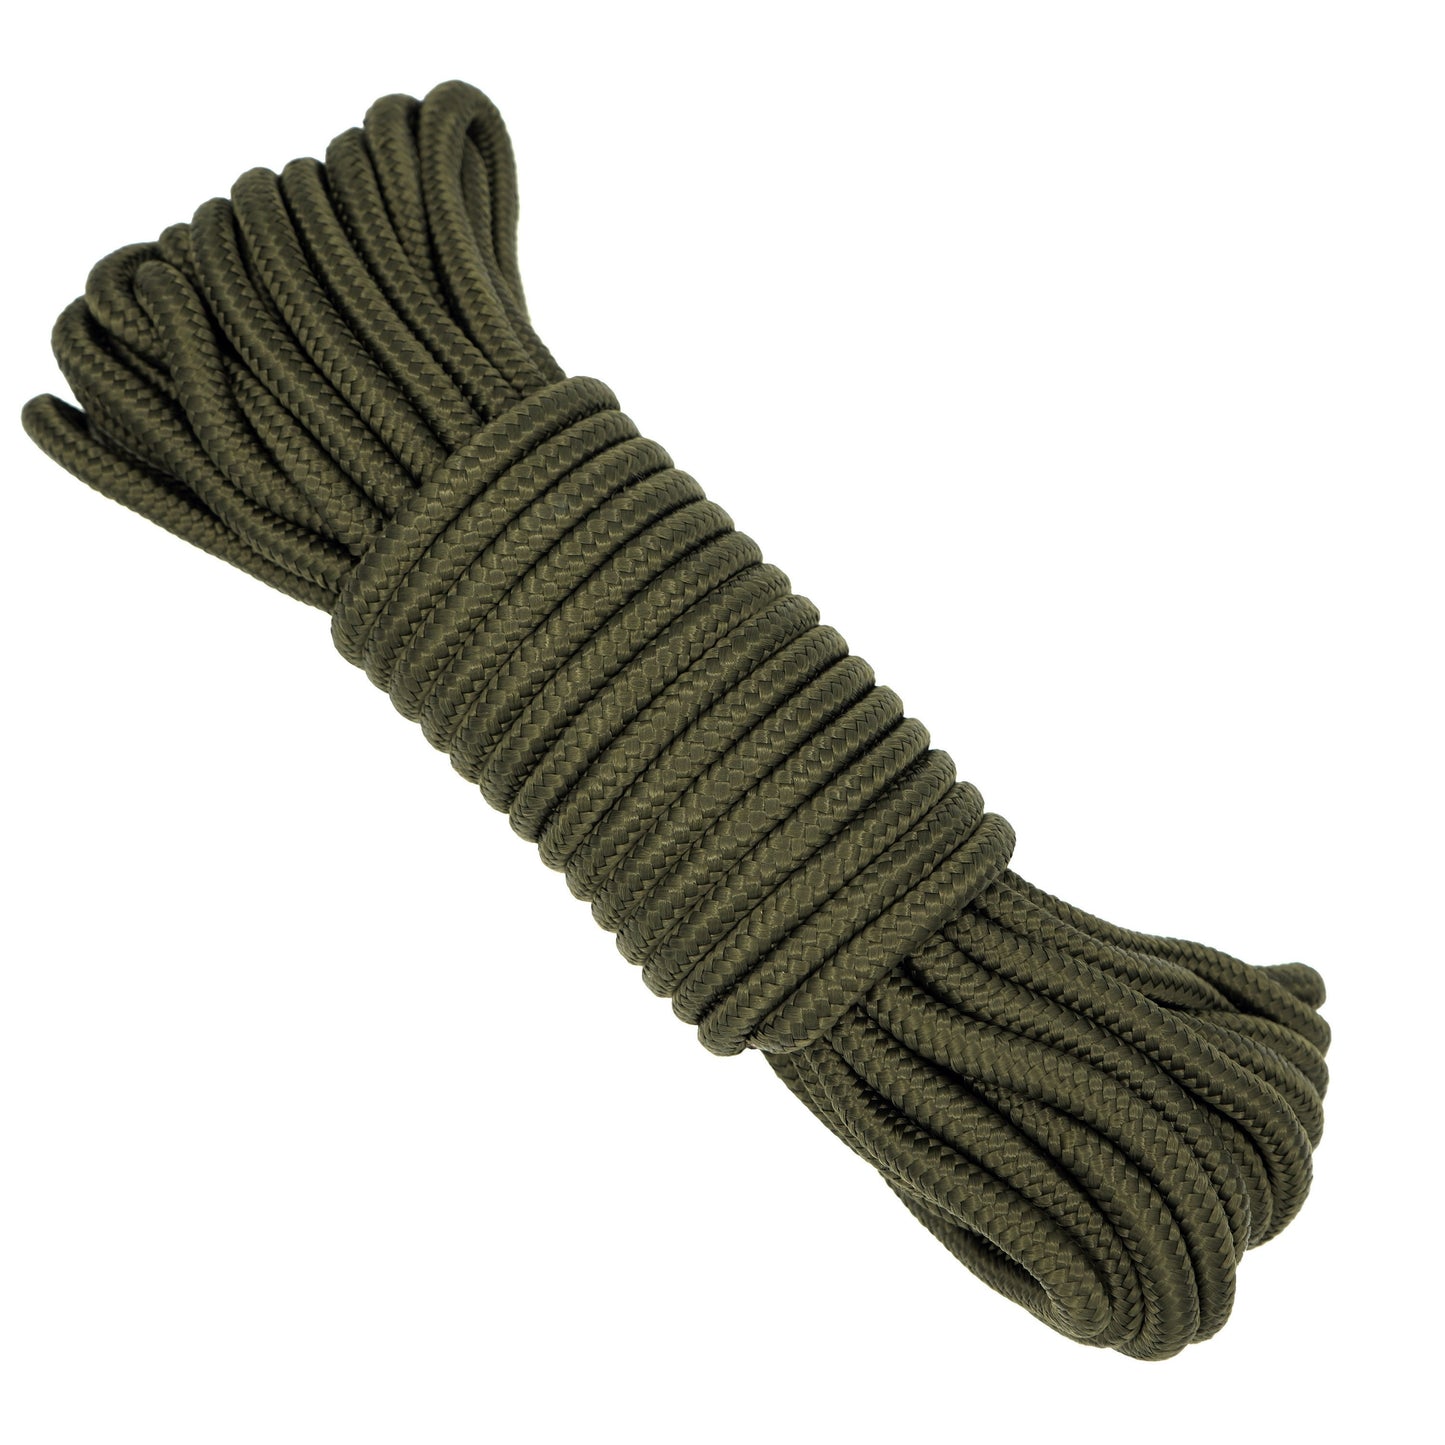 15m Bondage Rope in Army Green, 9mm Diameter